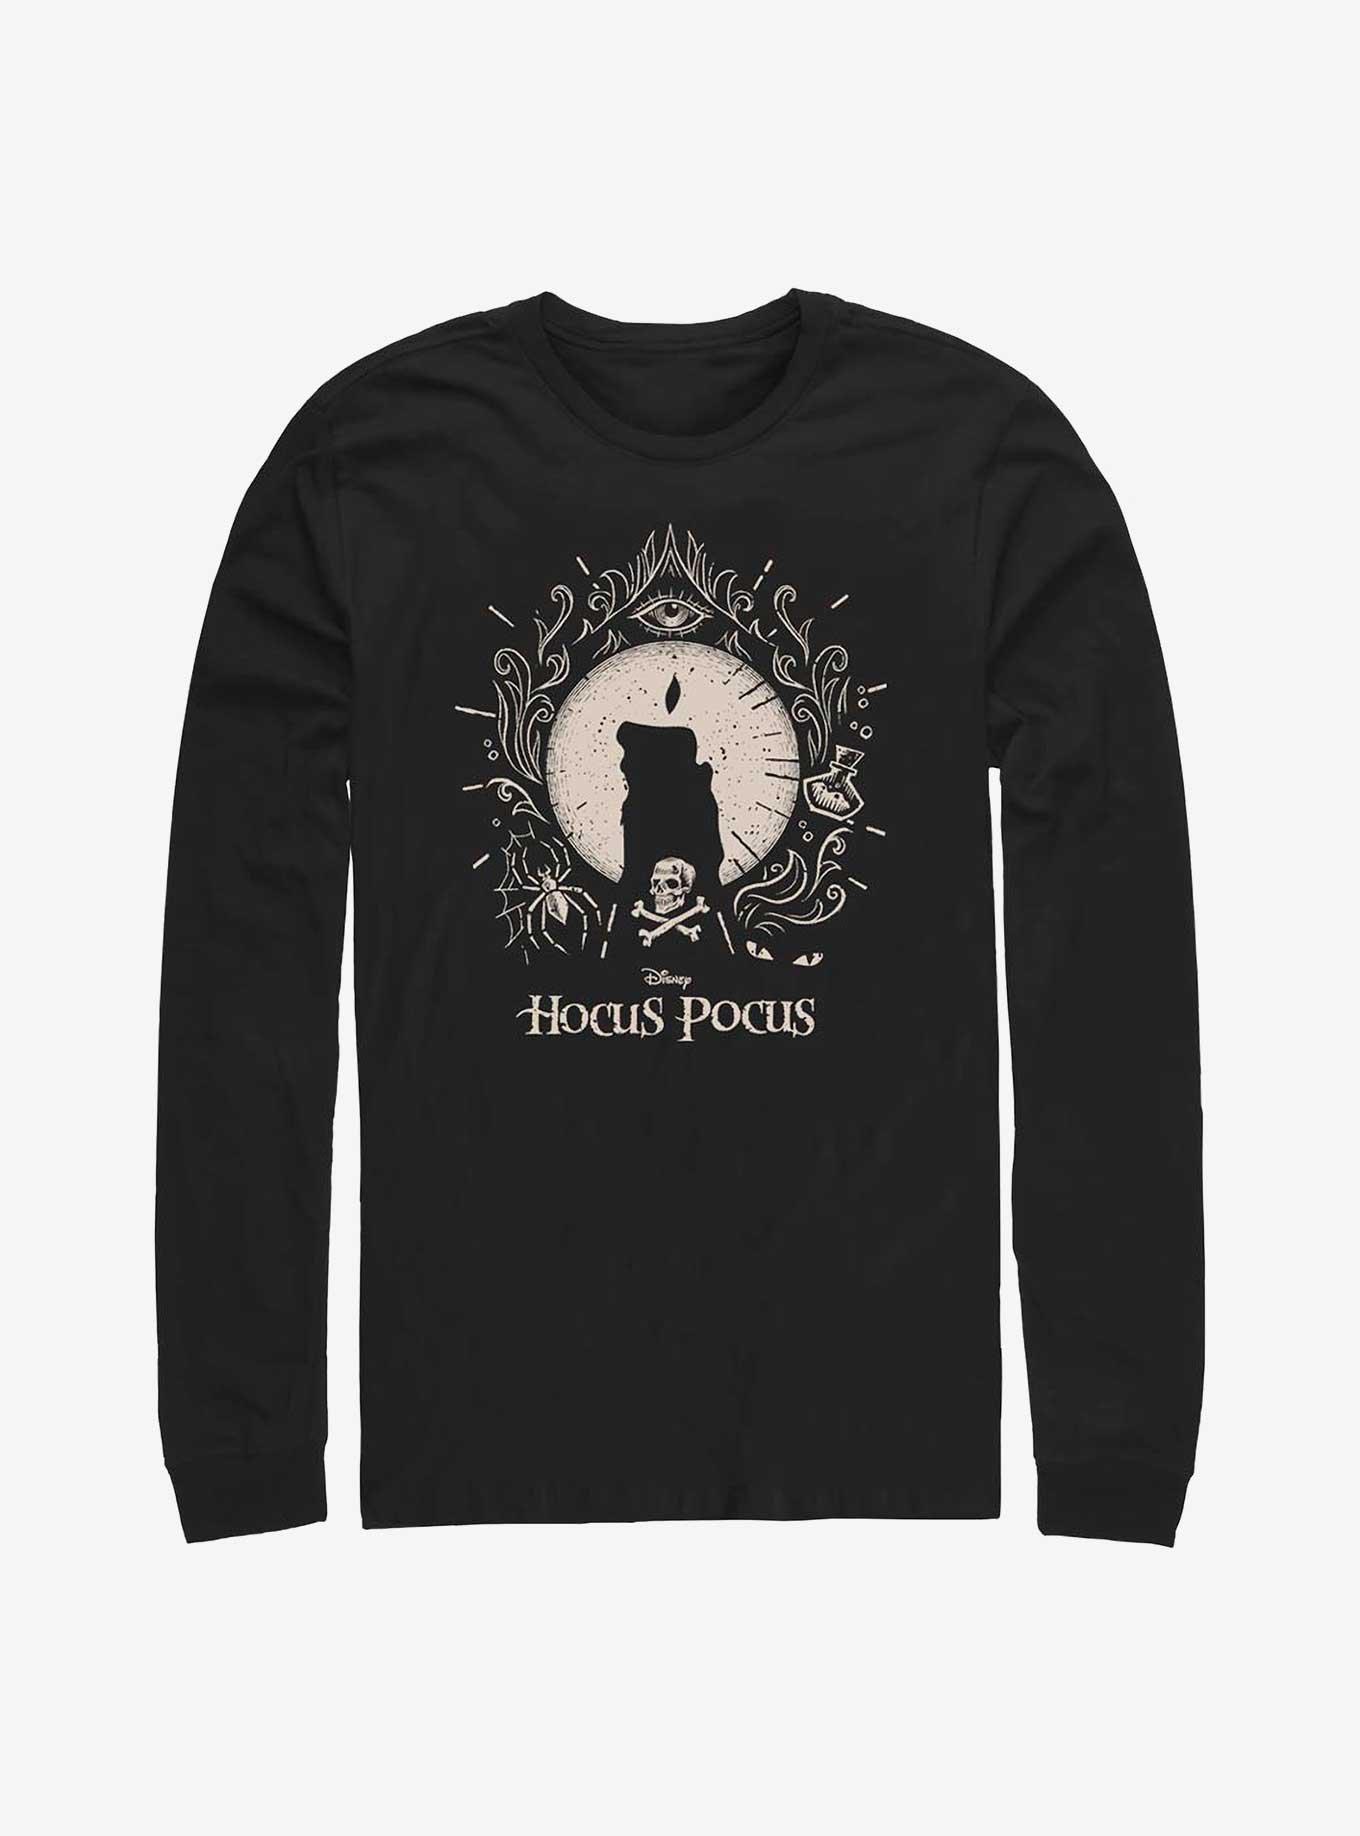 Disney Hocus Pocus Black Flame Long-Sleeve T-Shirt